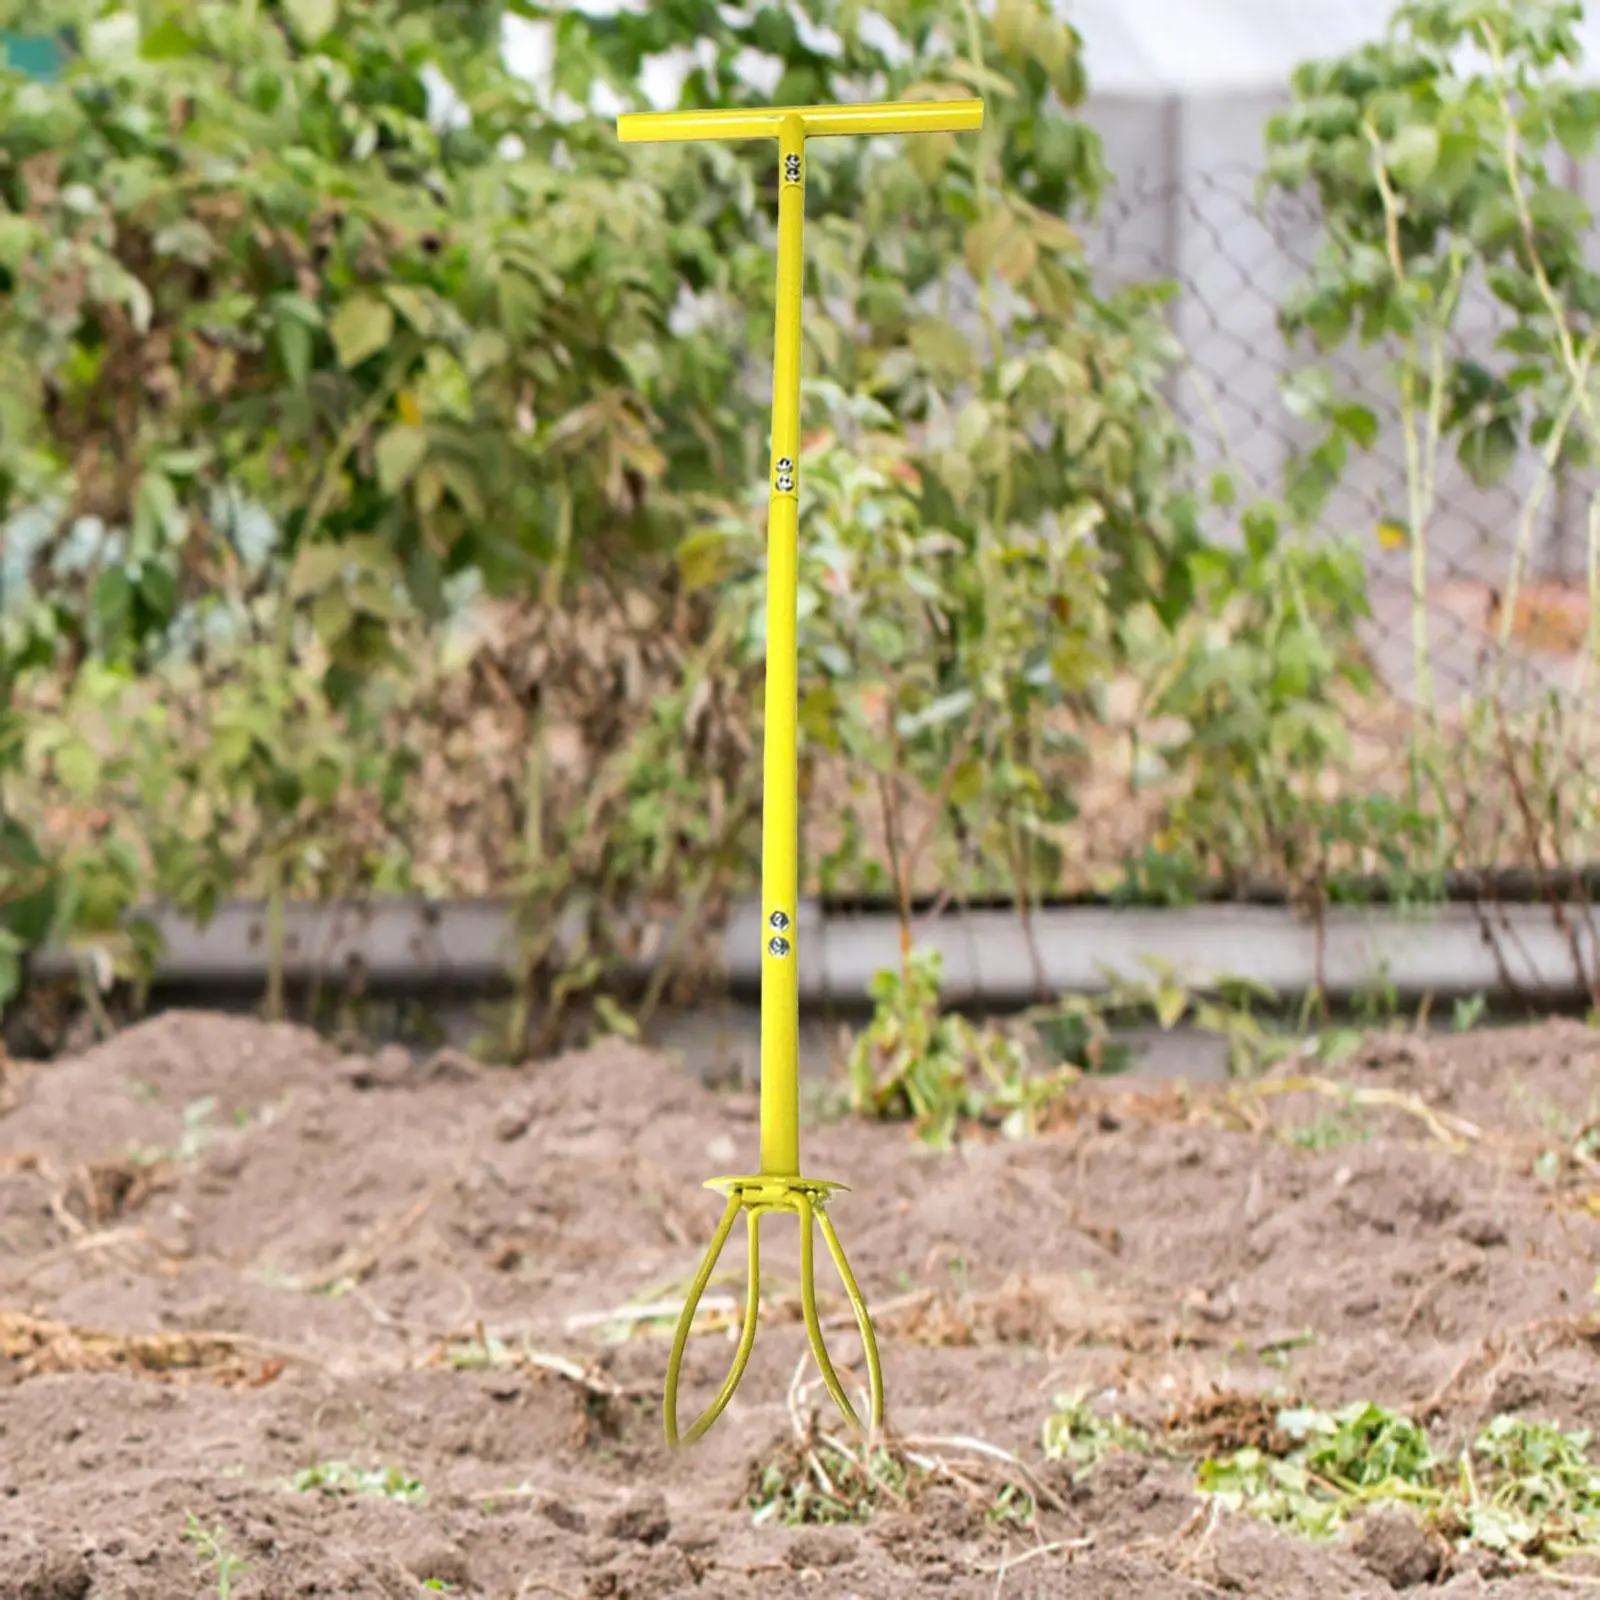 Manual Hand Tiller Rugged Heavy Duty Durable Agriculture Garden Soil Tiller with Adjustable Shaft Gardening Hand Twist Tiller